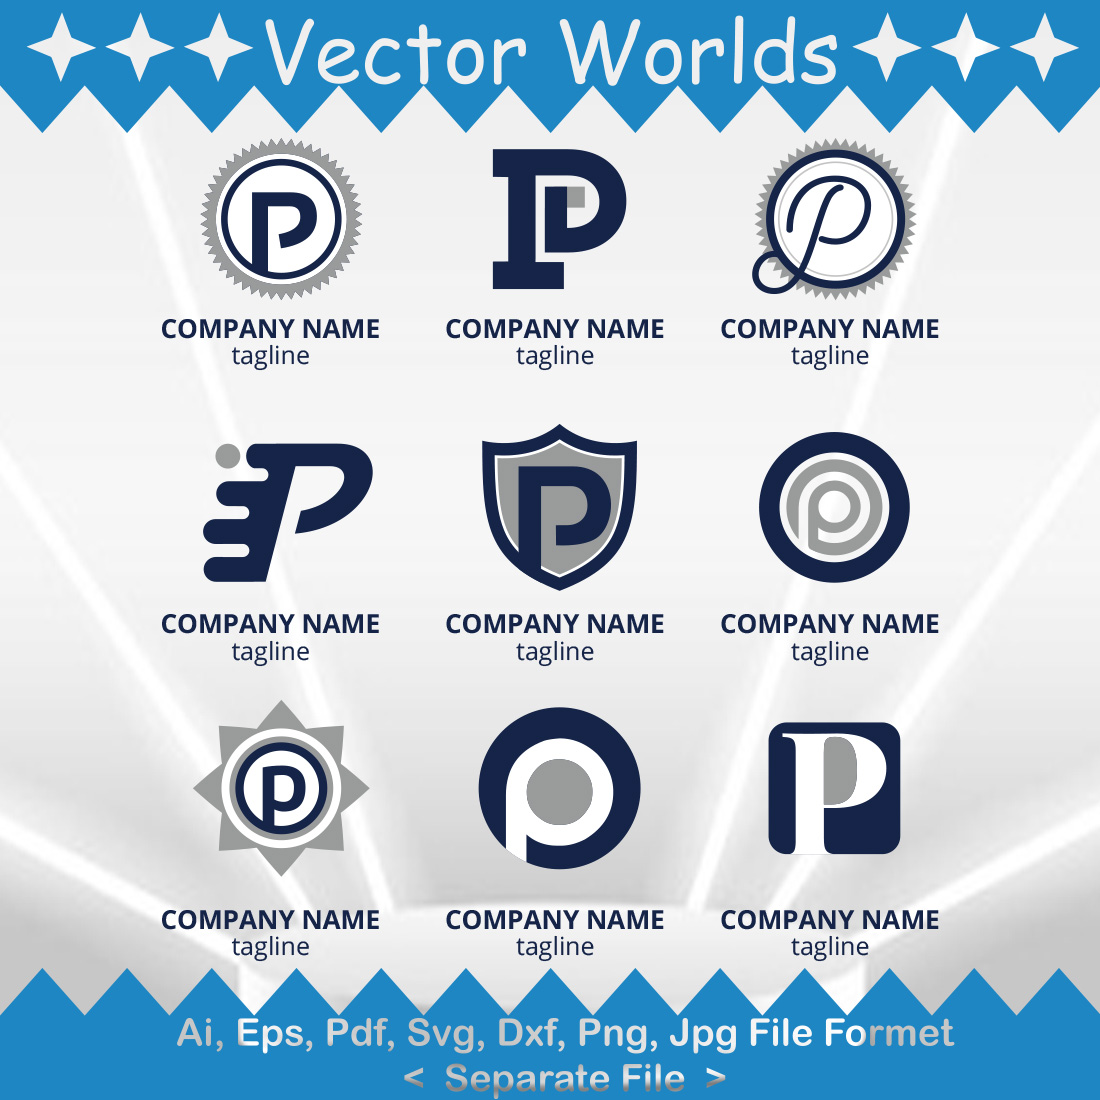 P Logo SVG Vector Design cover image.